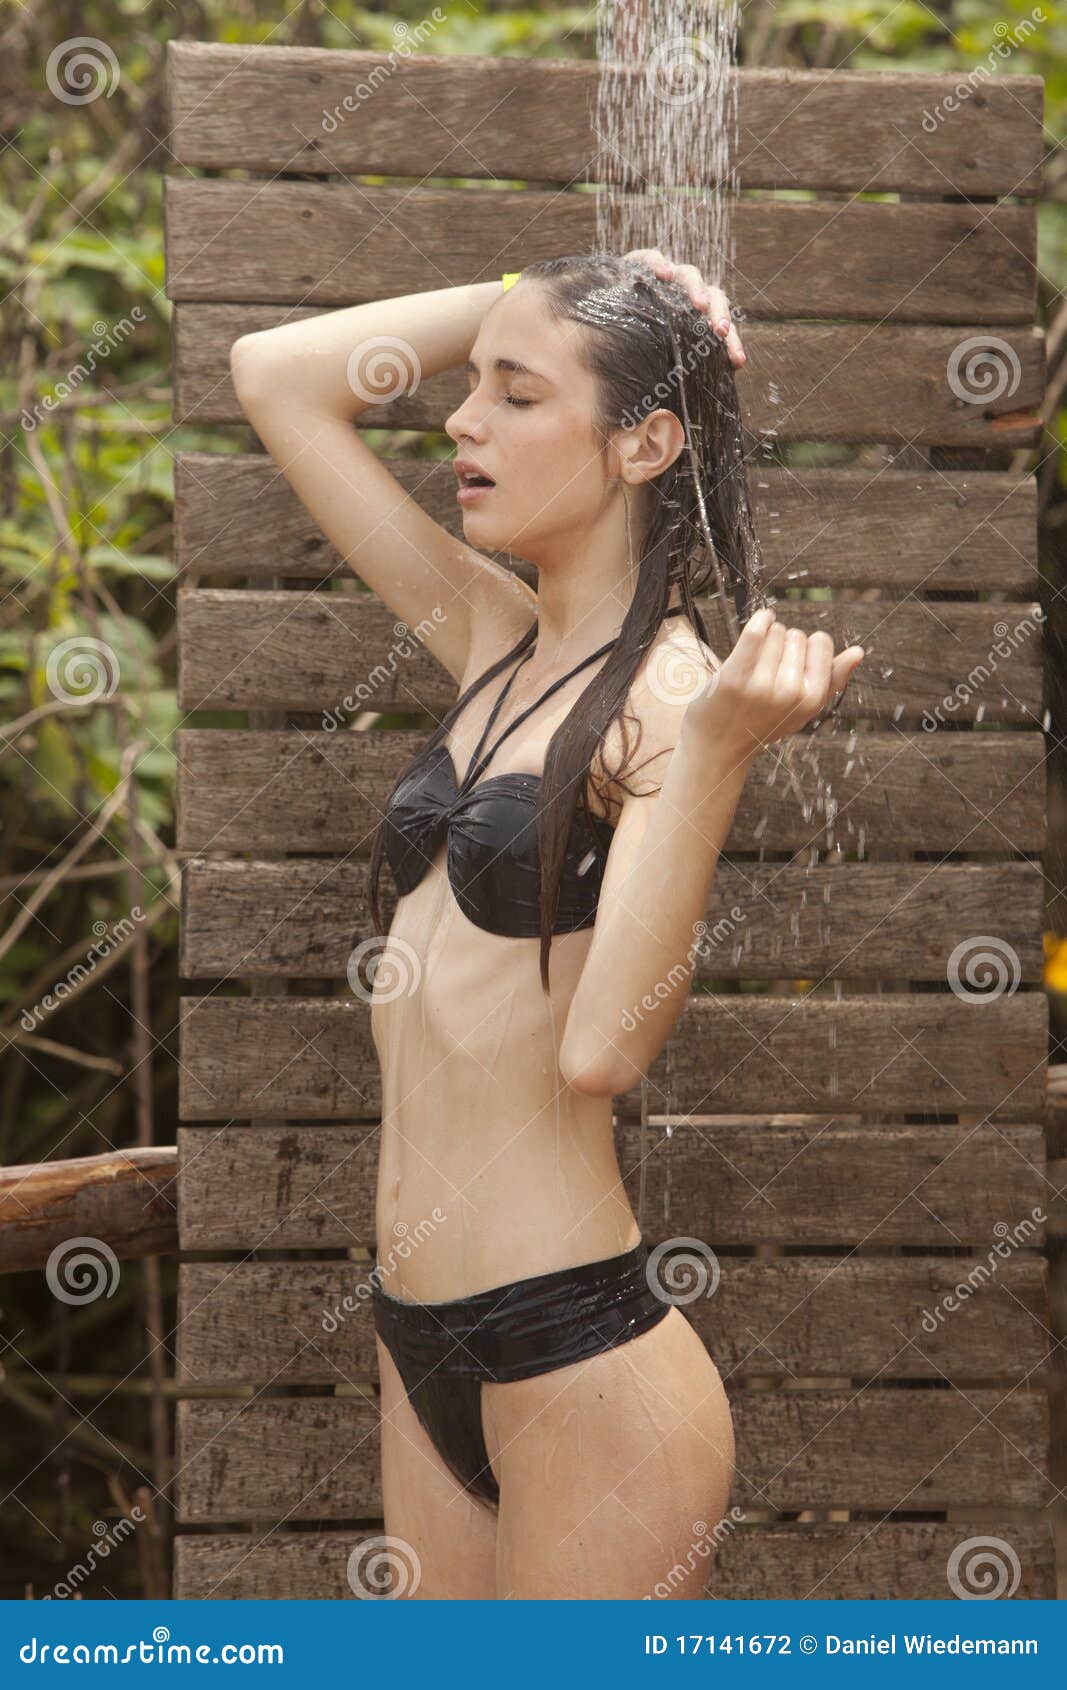 clinton janse van rensburg add photo sexy teen bikini photos